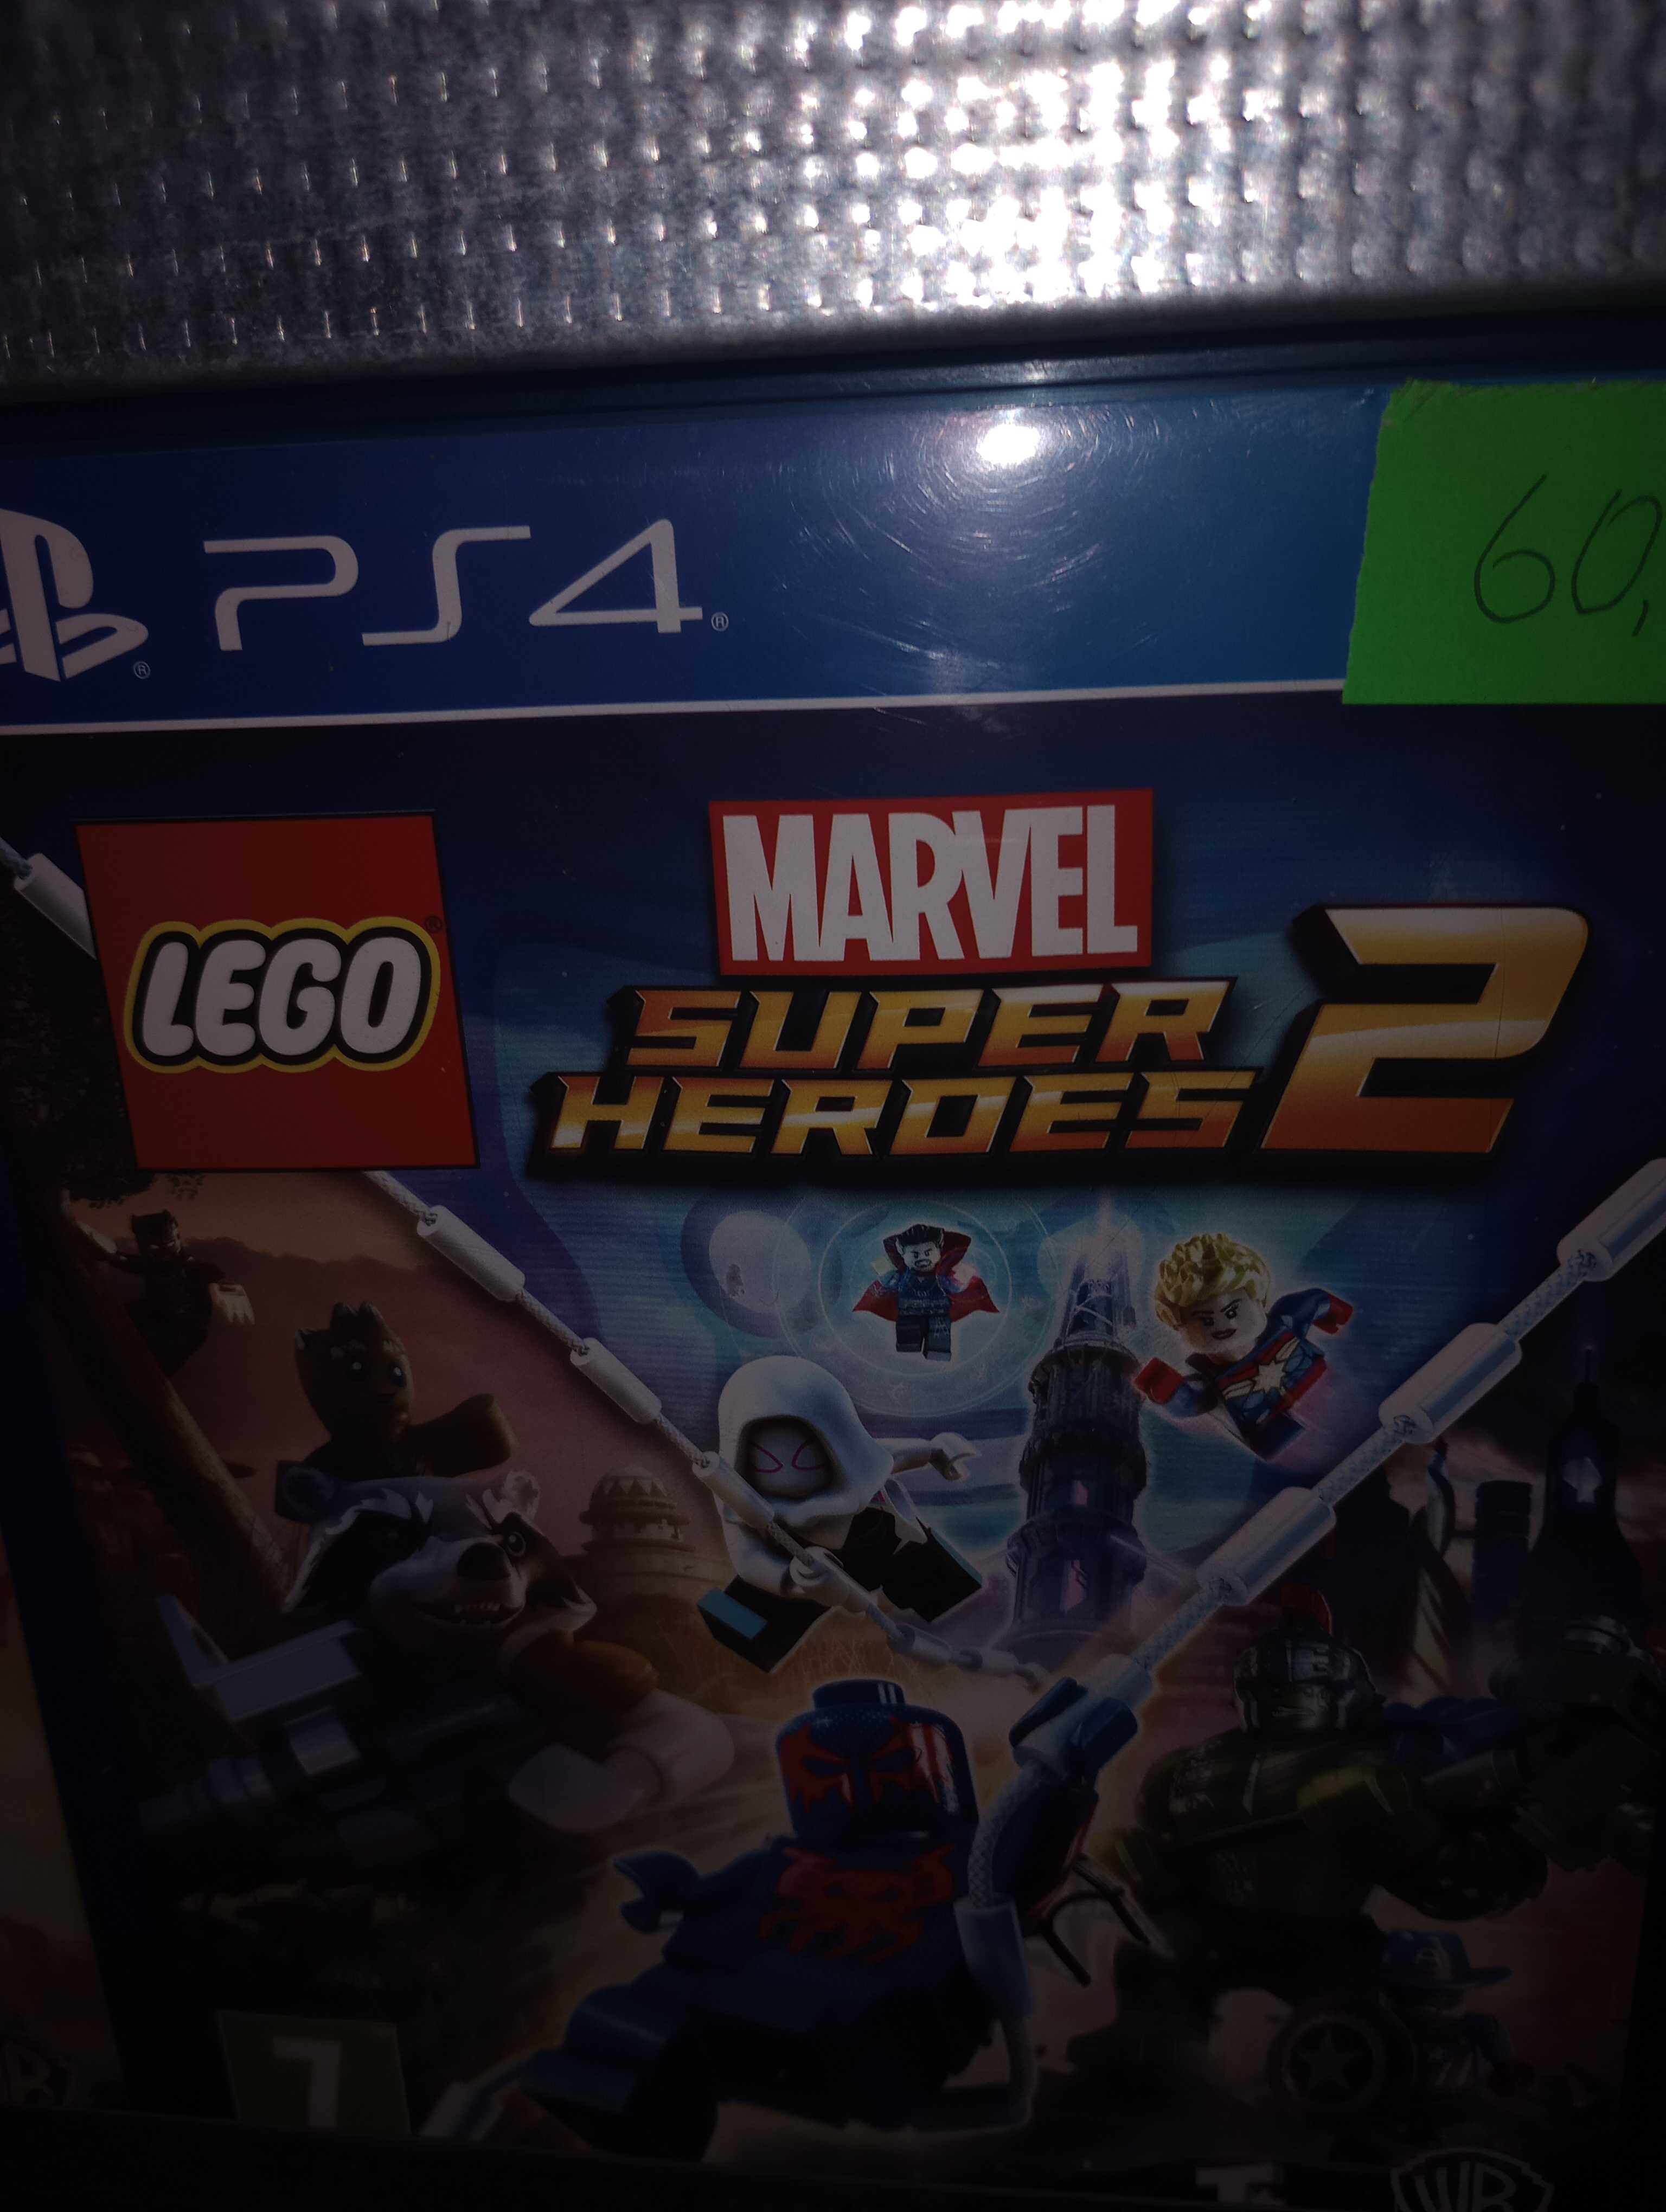 PS4 LEGO Marvel super Heroes 2 PlayStation 4